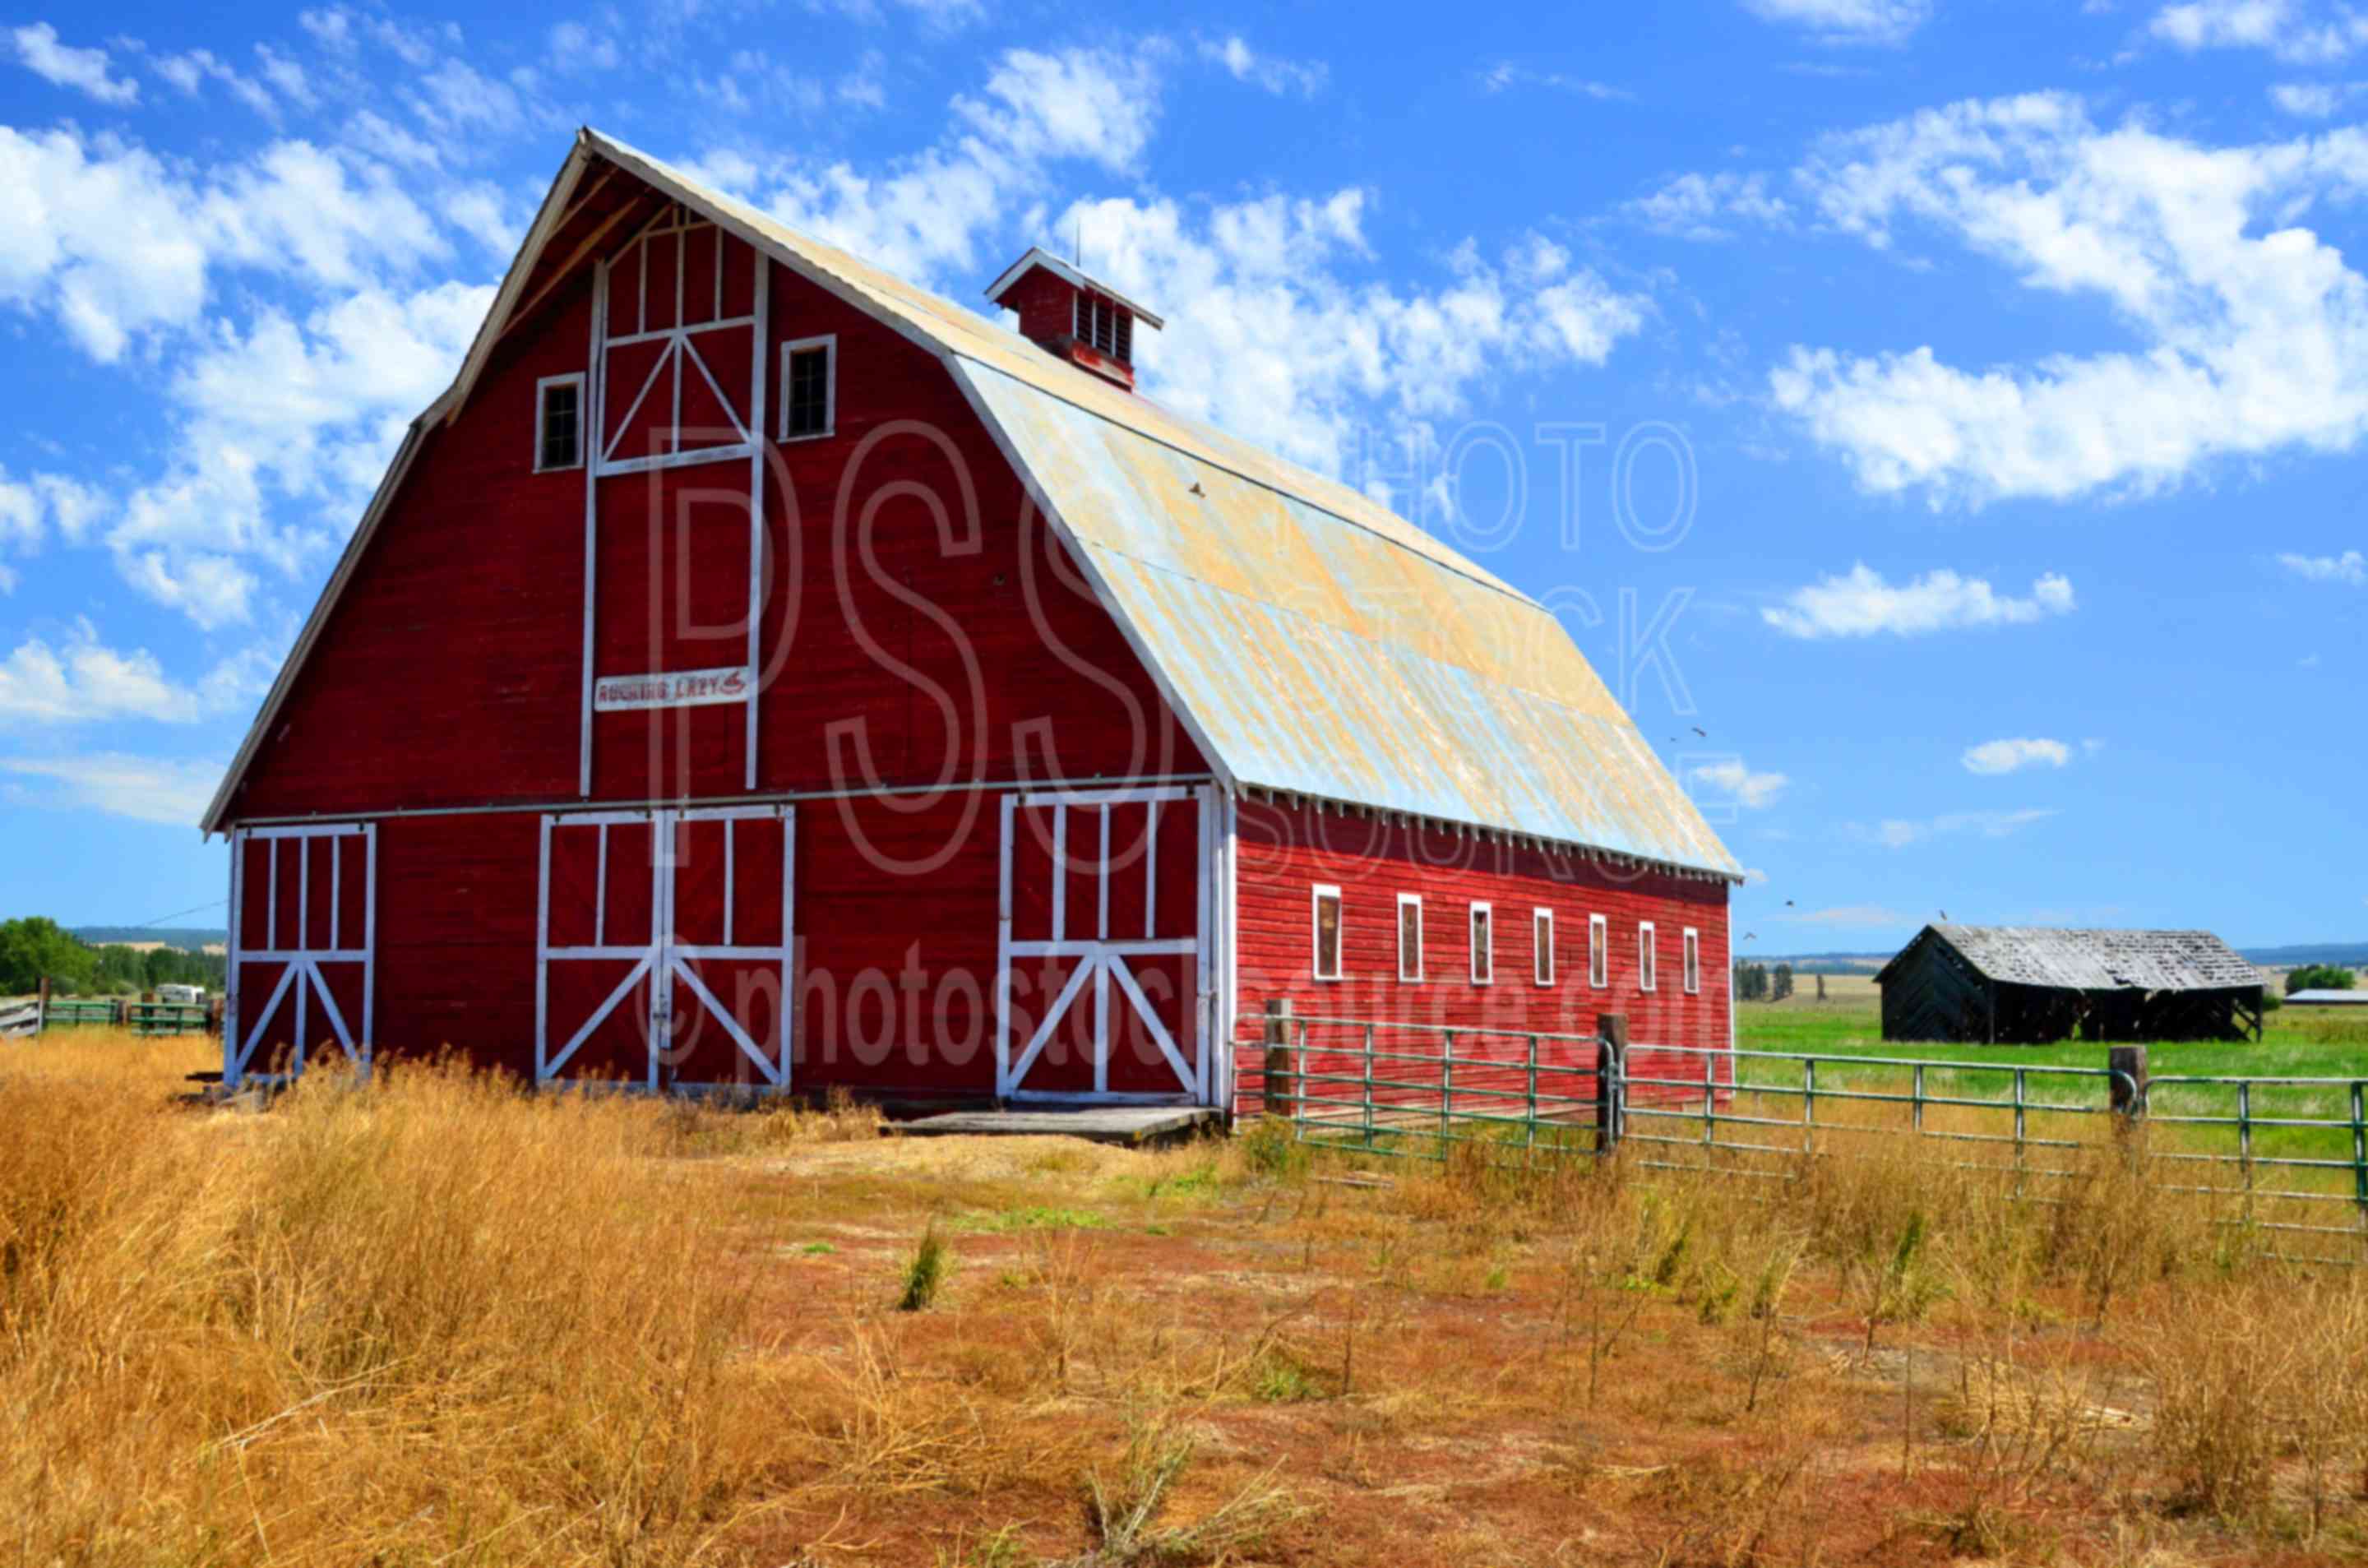 Ukiah Red Barn,barn,red,fence,rural